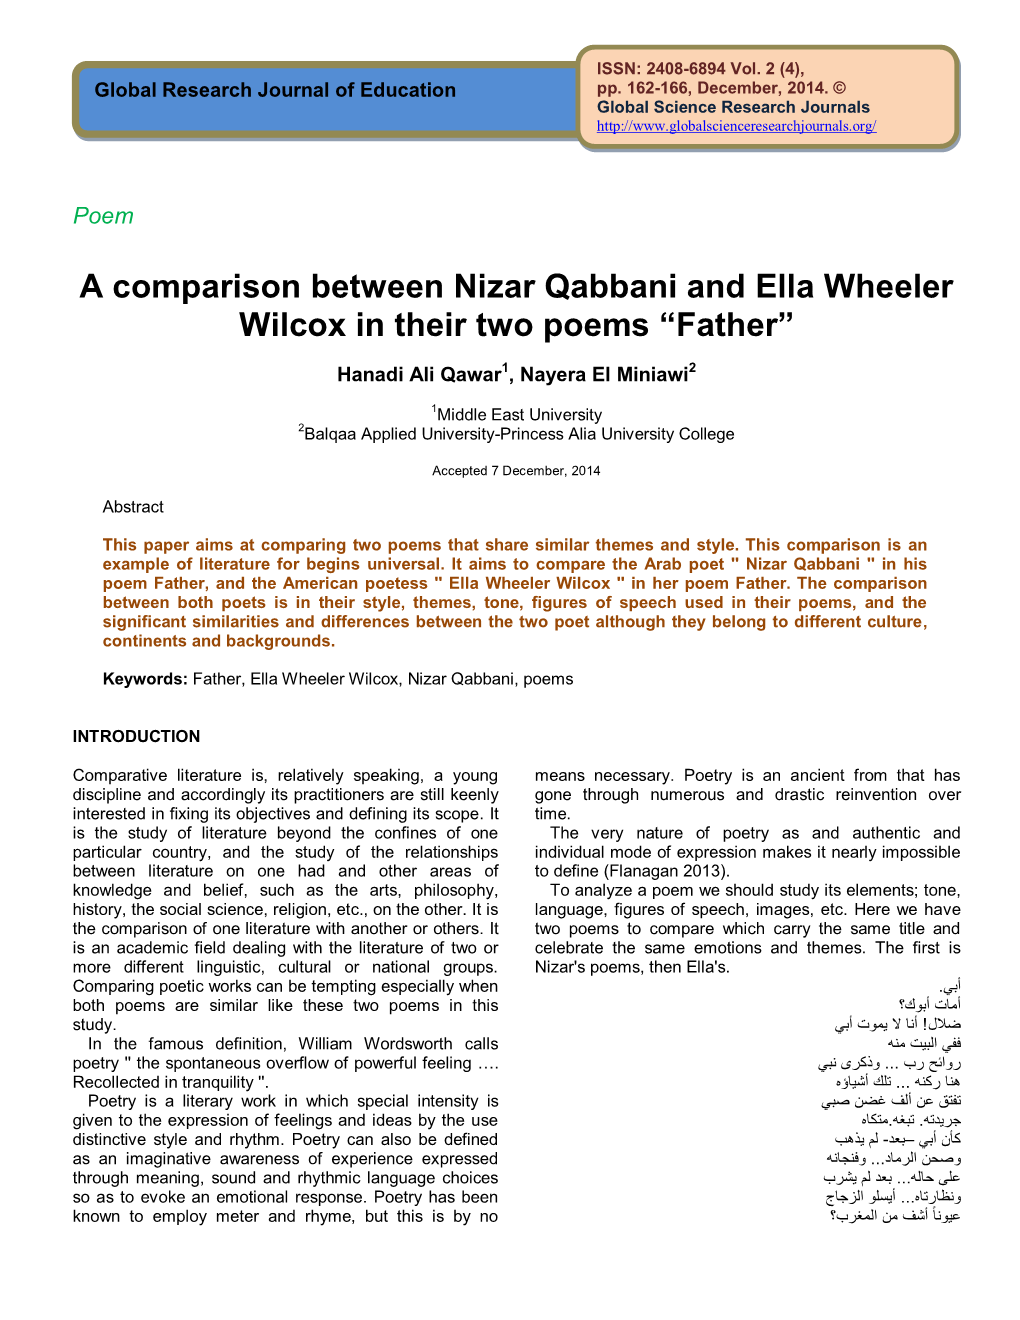 A Comparison Between Nizar Qabbani and Ella Wheeler Wilcox in Their Two Poems “Father”